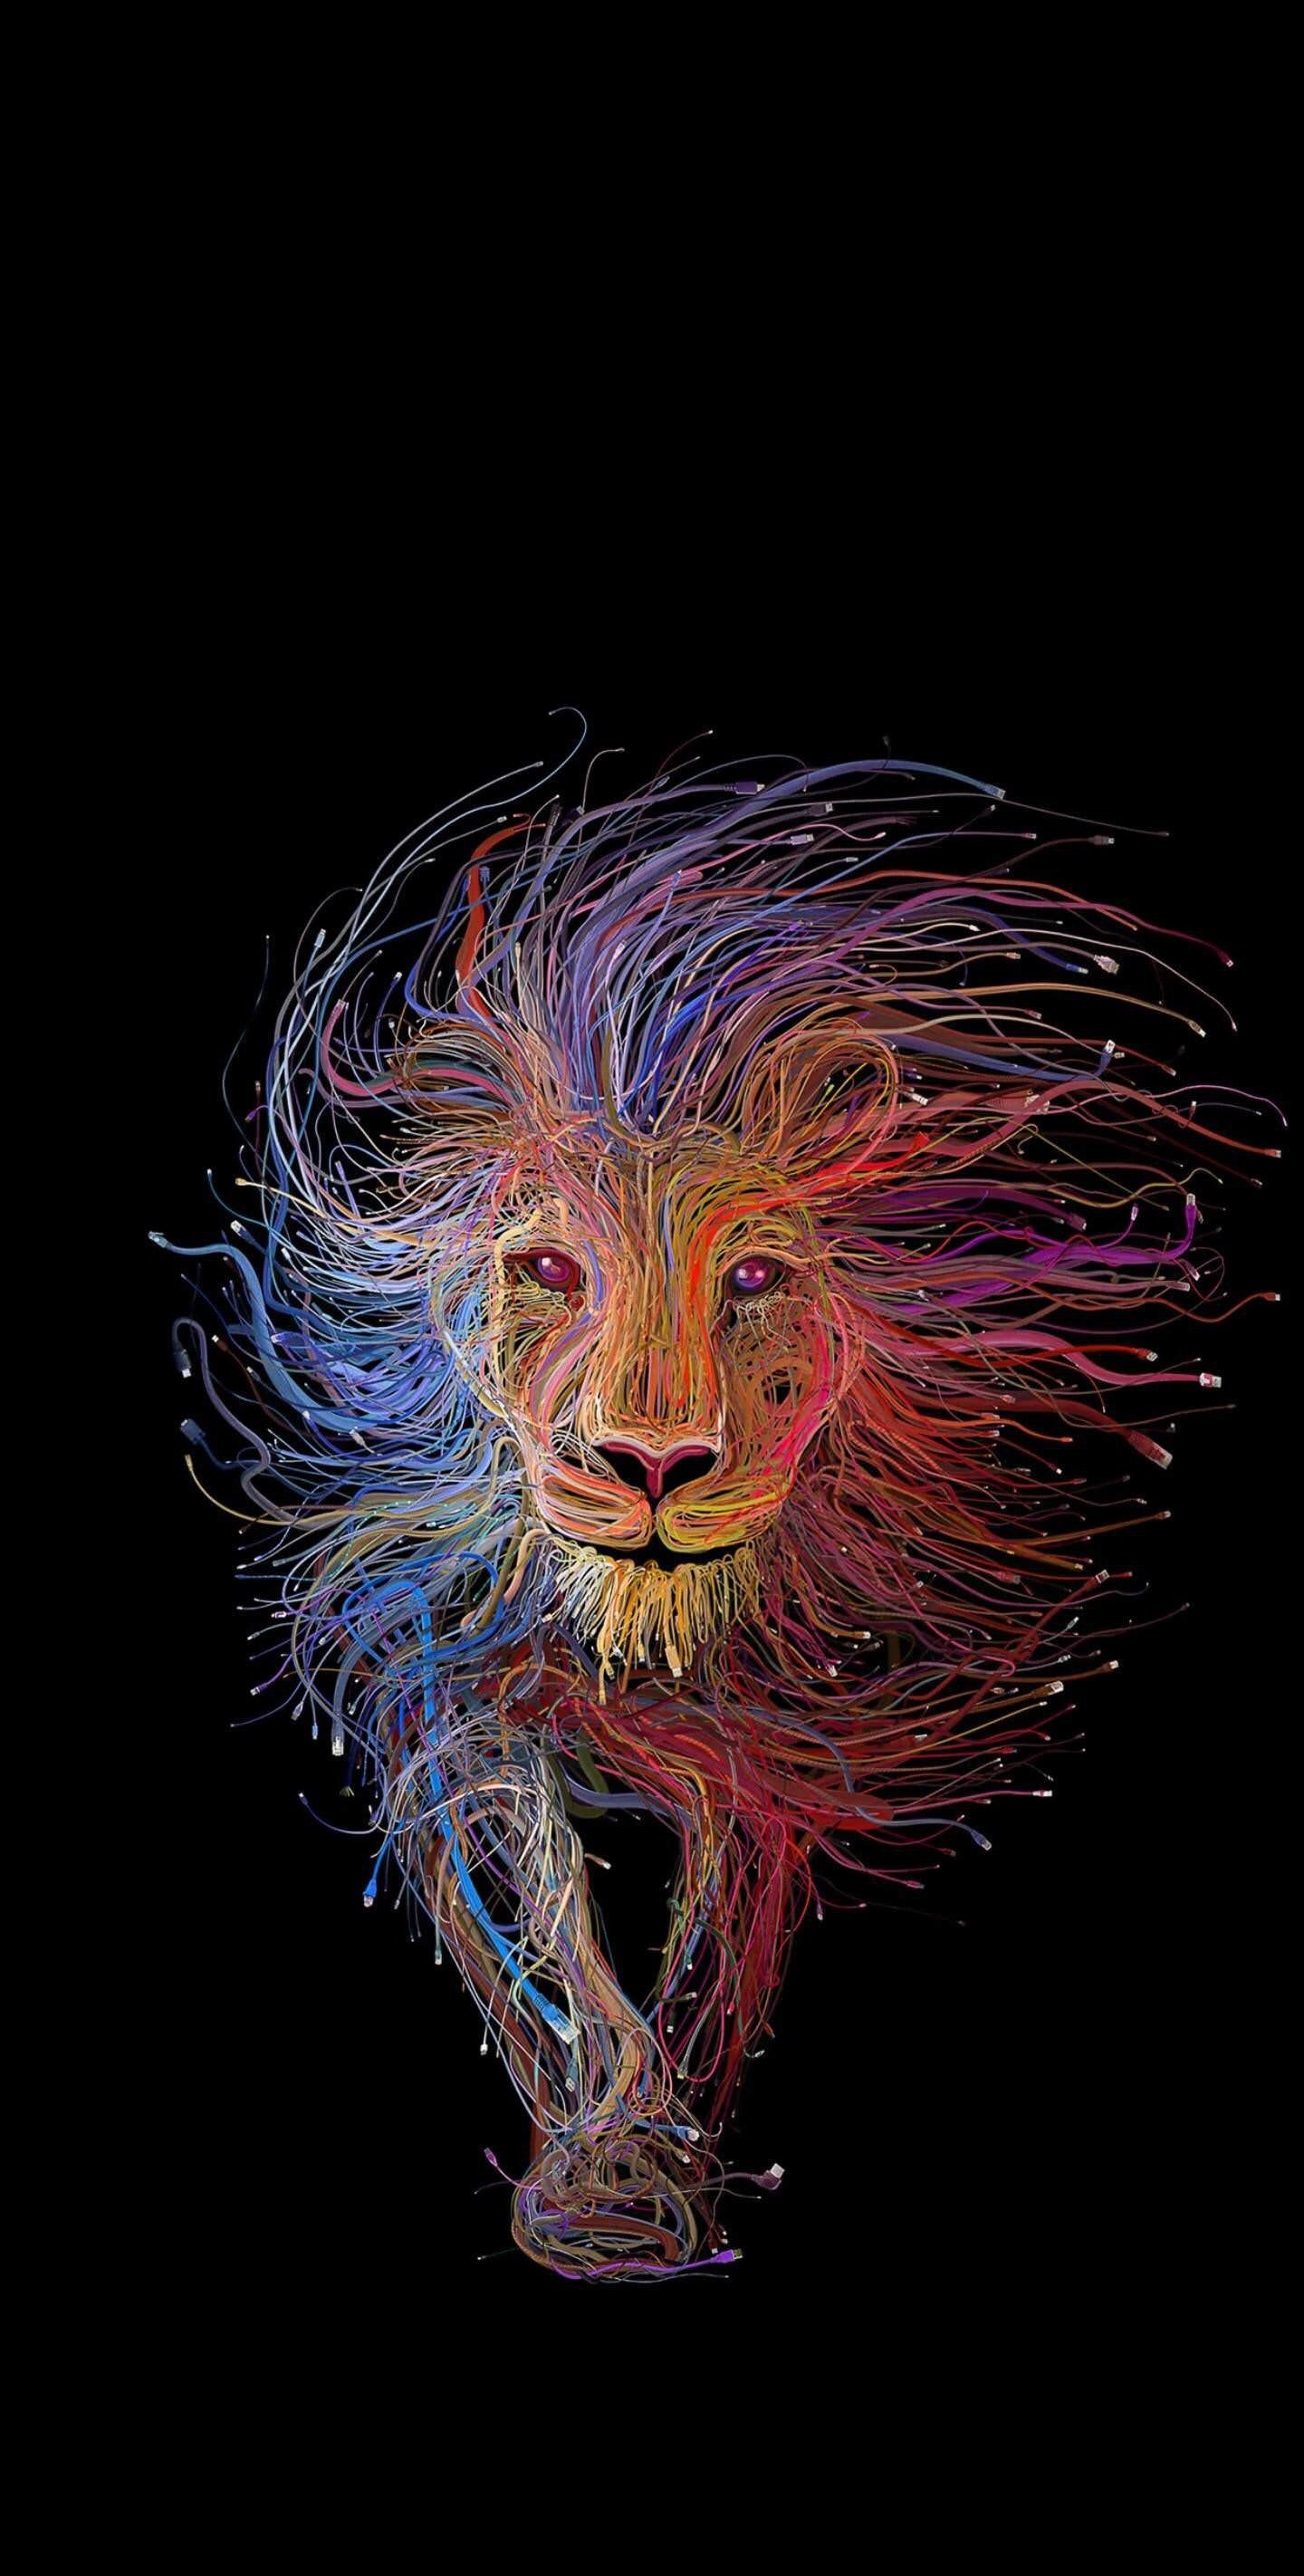 Amoled vivid lion